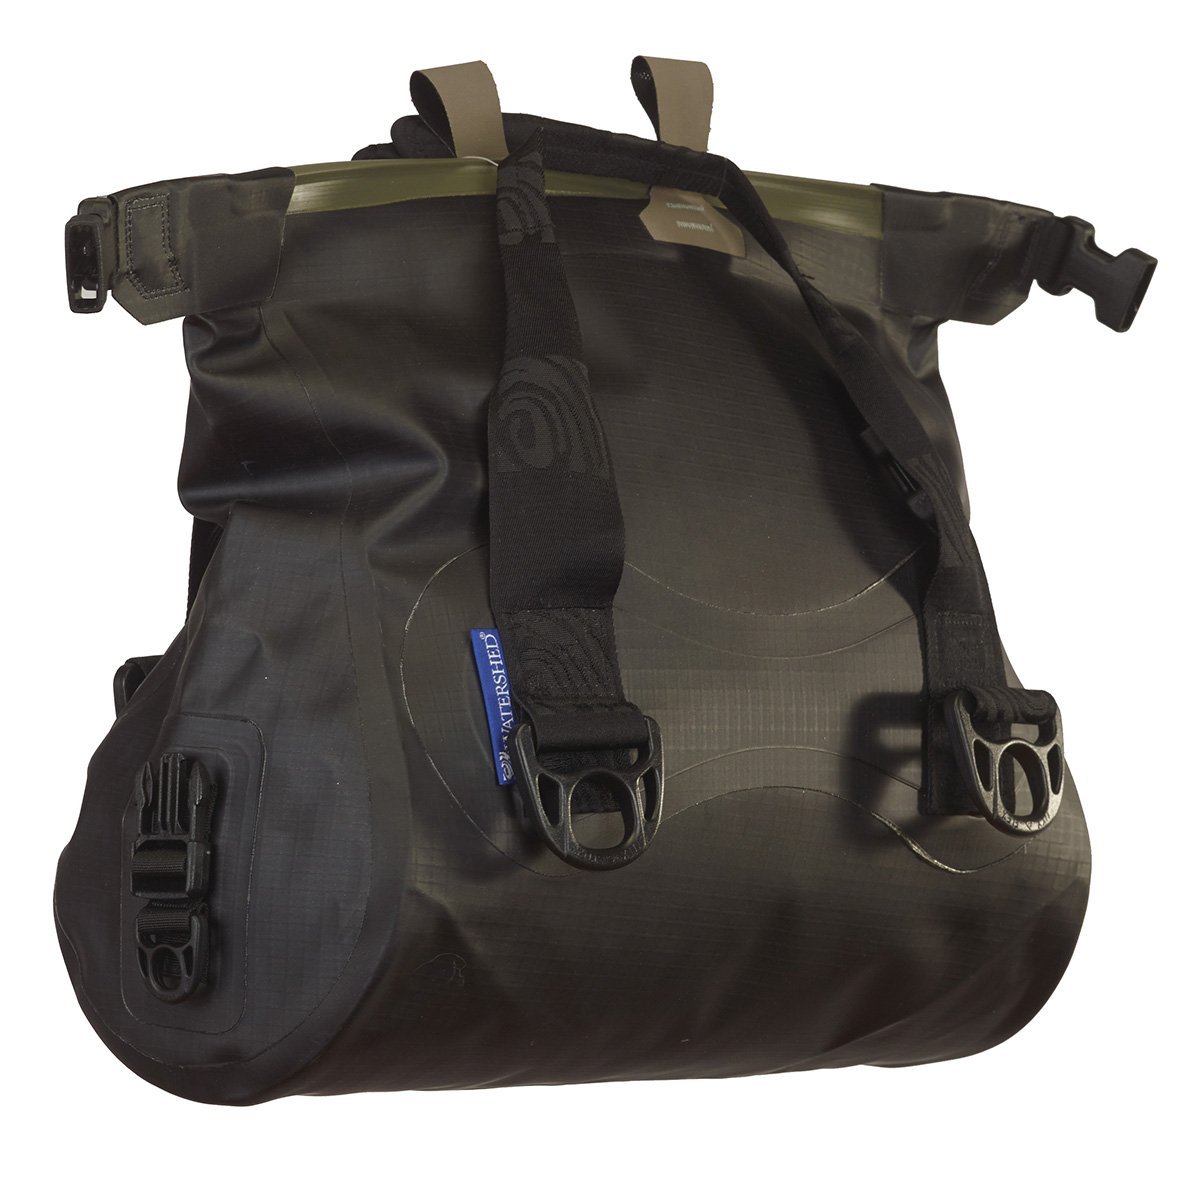 Ocoee duffel - 15 Litre - Dry Bags